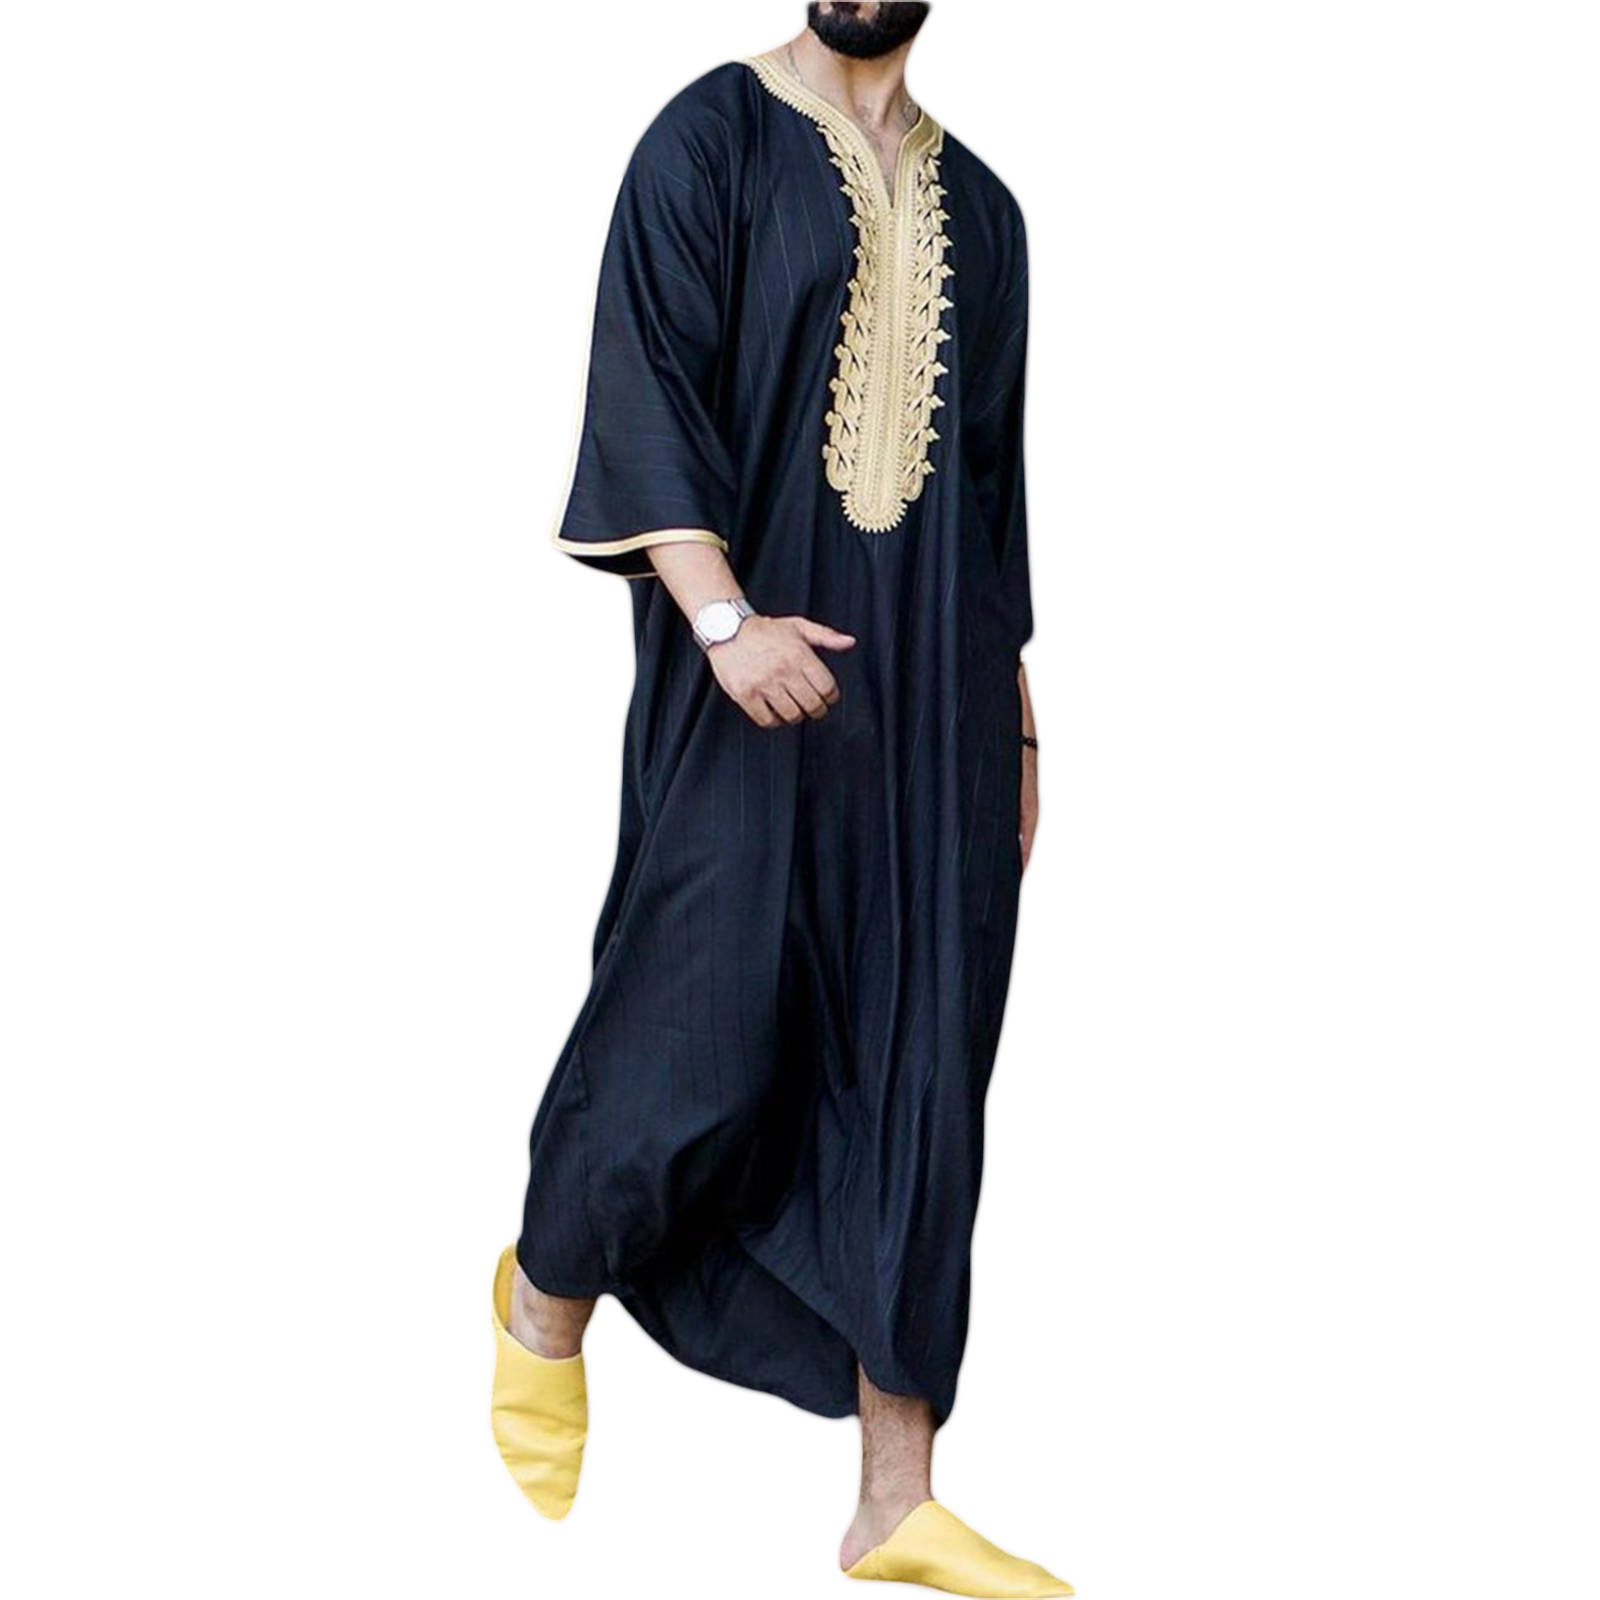 Men's Islamic Muslim Jubba Kaftan Thobe Abaya Arab Robe Maxi Dress Middle East Robe Shirt - image 1 of 5